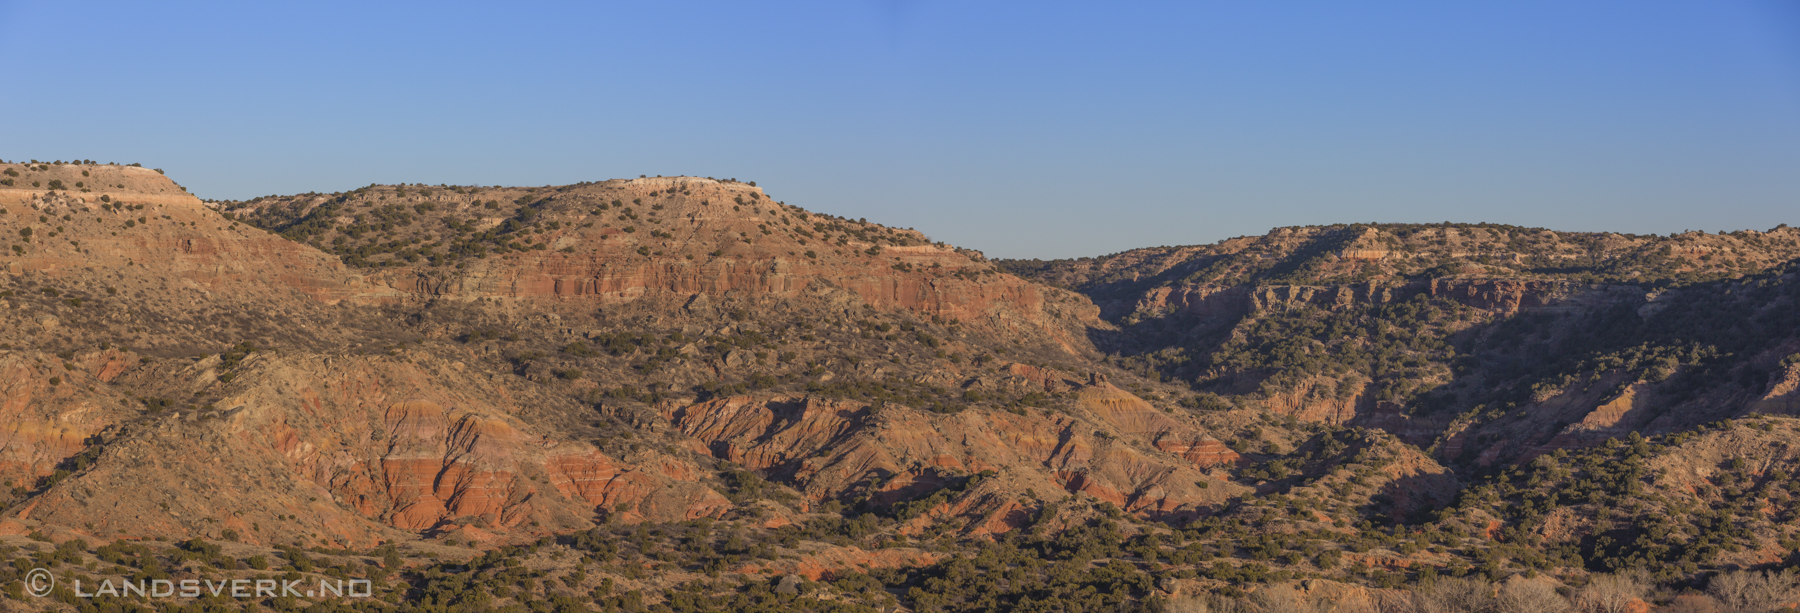 Palo Duro Canyon, Amarillo, Texas. 

(Canon EOS 5D Mark III / Canon EF 70-200mm f/2.8 L IS II USM)